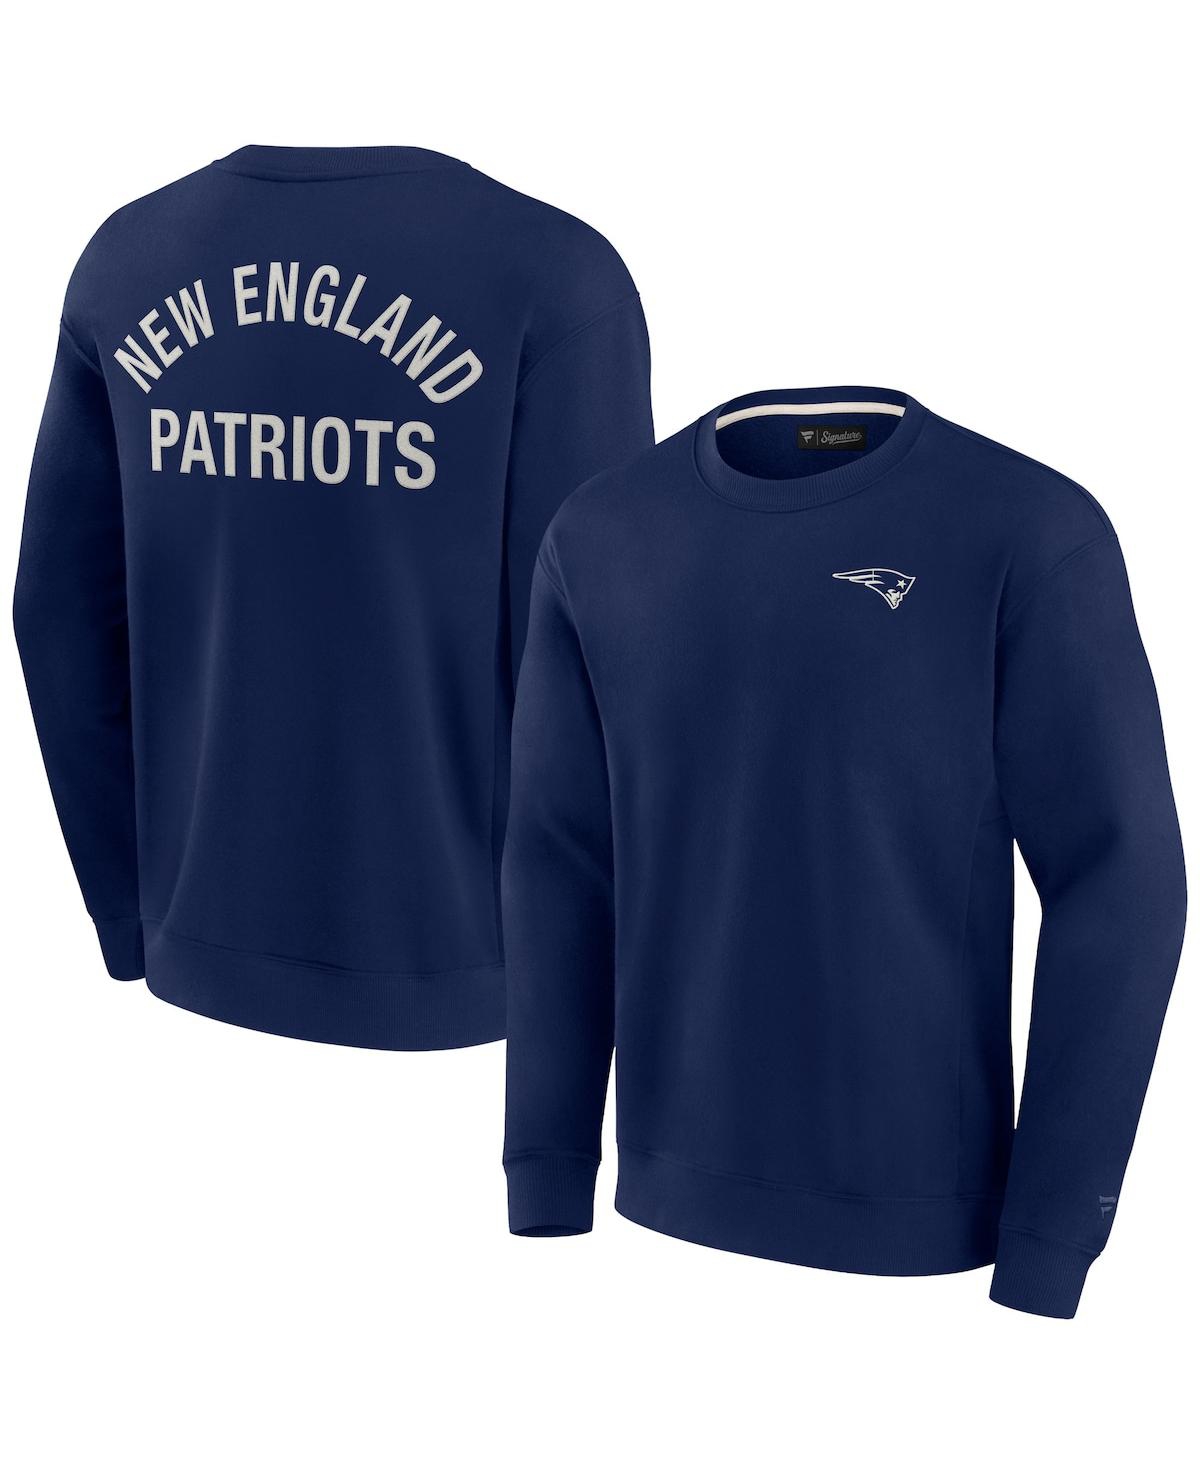 Men's and Women's Fanatics Signature Navy New England Patriots Super Soft Pullover Crew Sweatshirt - Navy